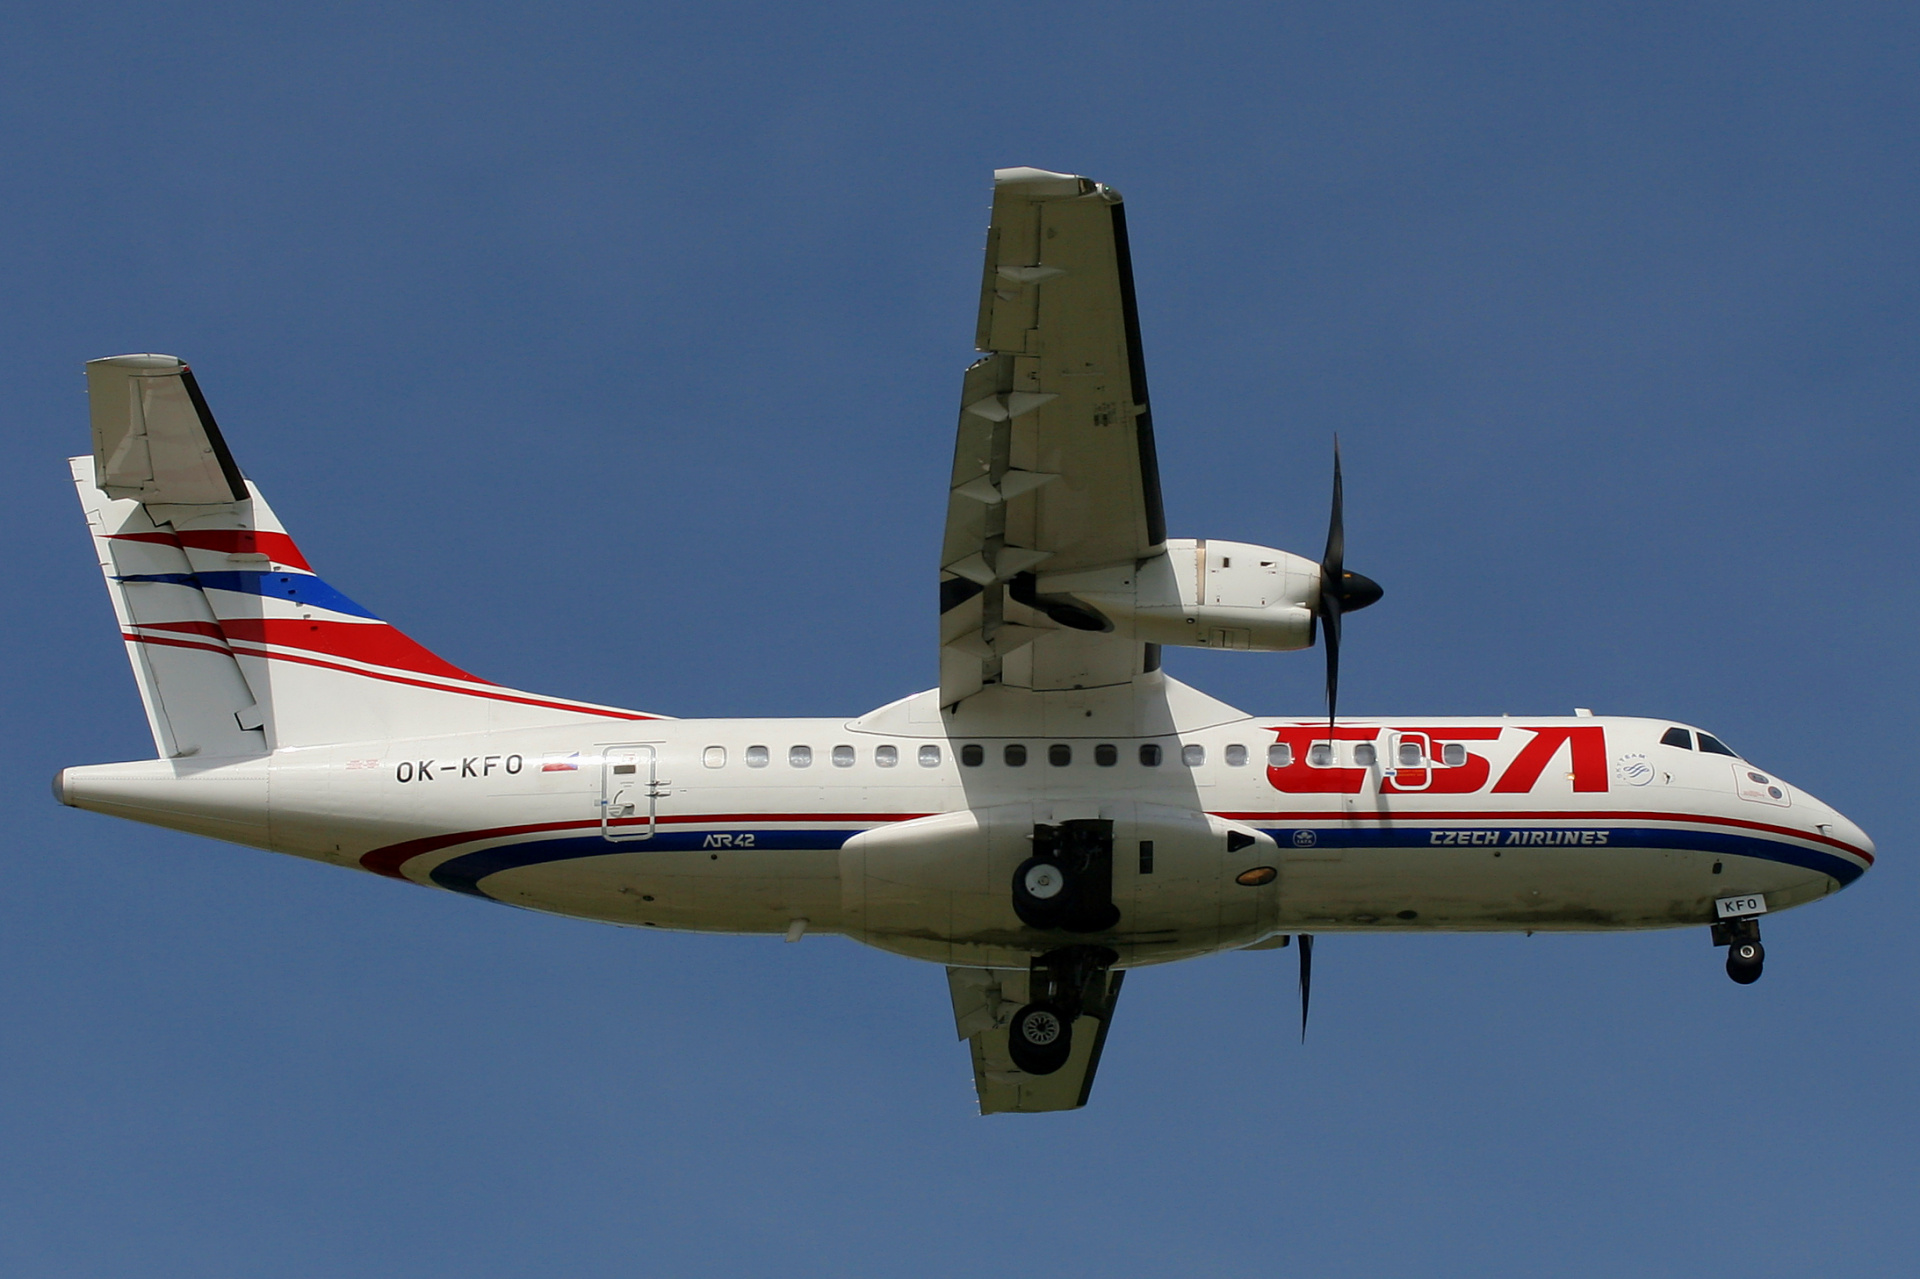 OK-KFO (Aircraft » EPWA Spotting » ATR 42 » CSA Czech Airlines)